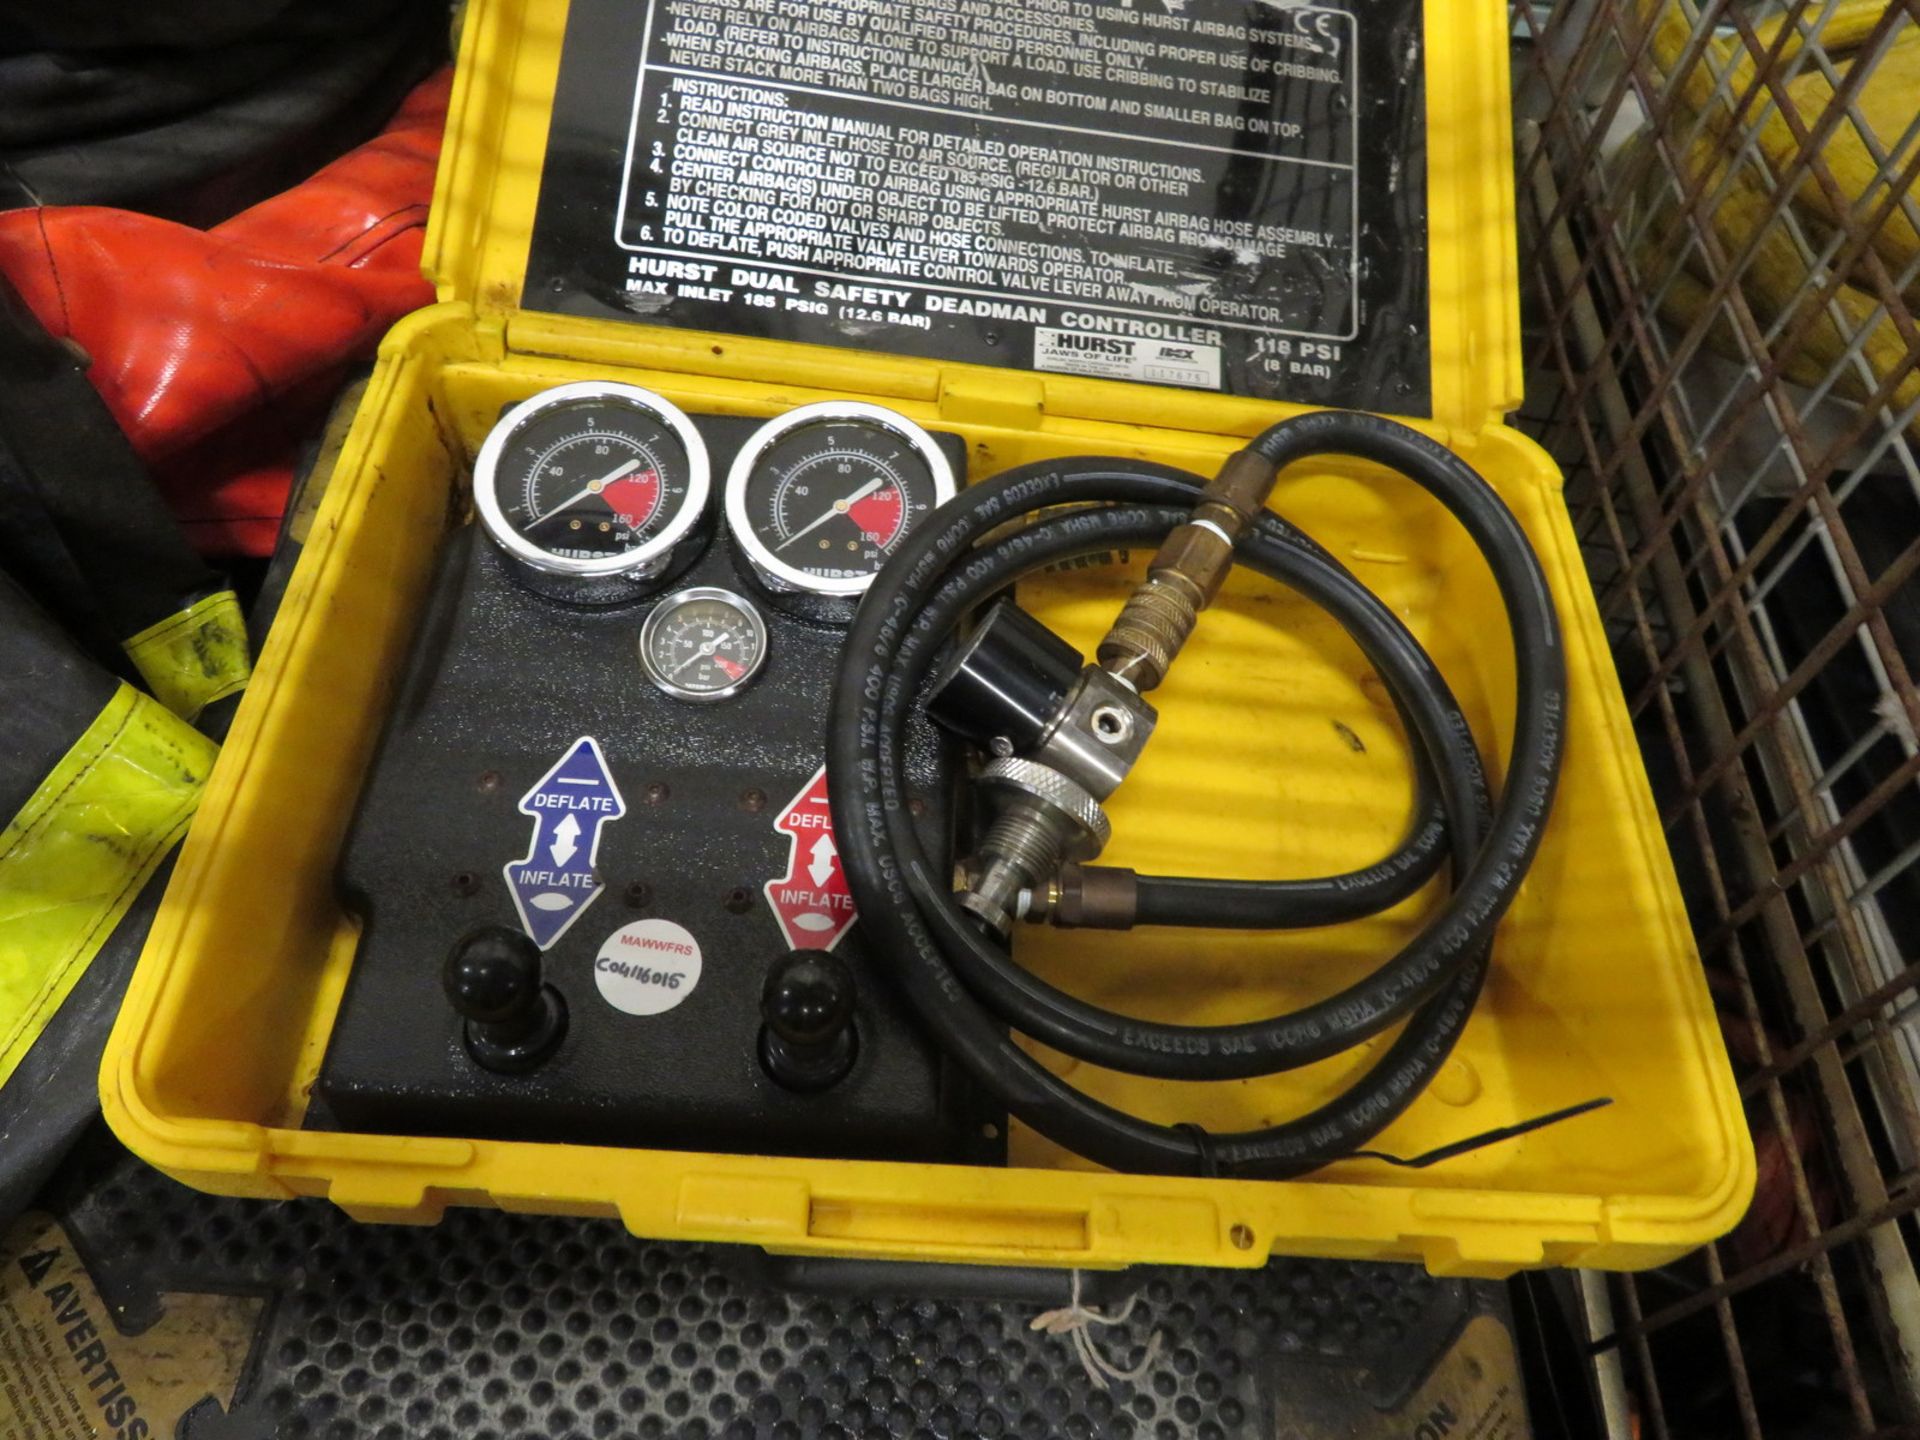 Hydraulic Air Bag Lifting Equipment - lifting bag, controller, hoses, gauge kit - Image 4 of 5